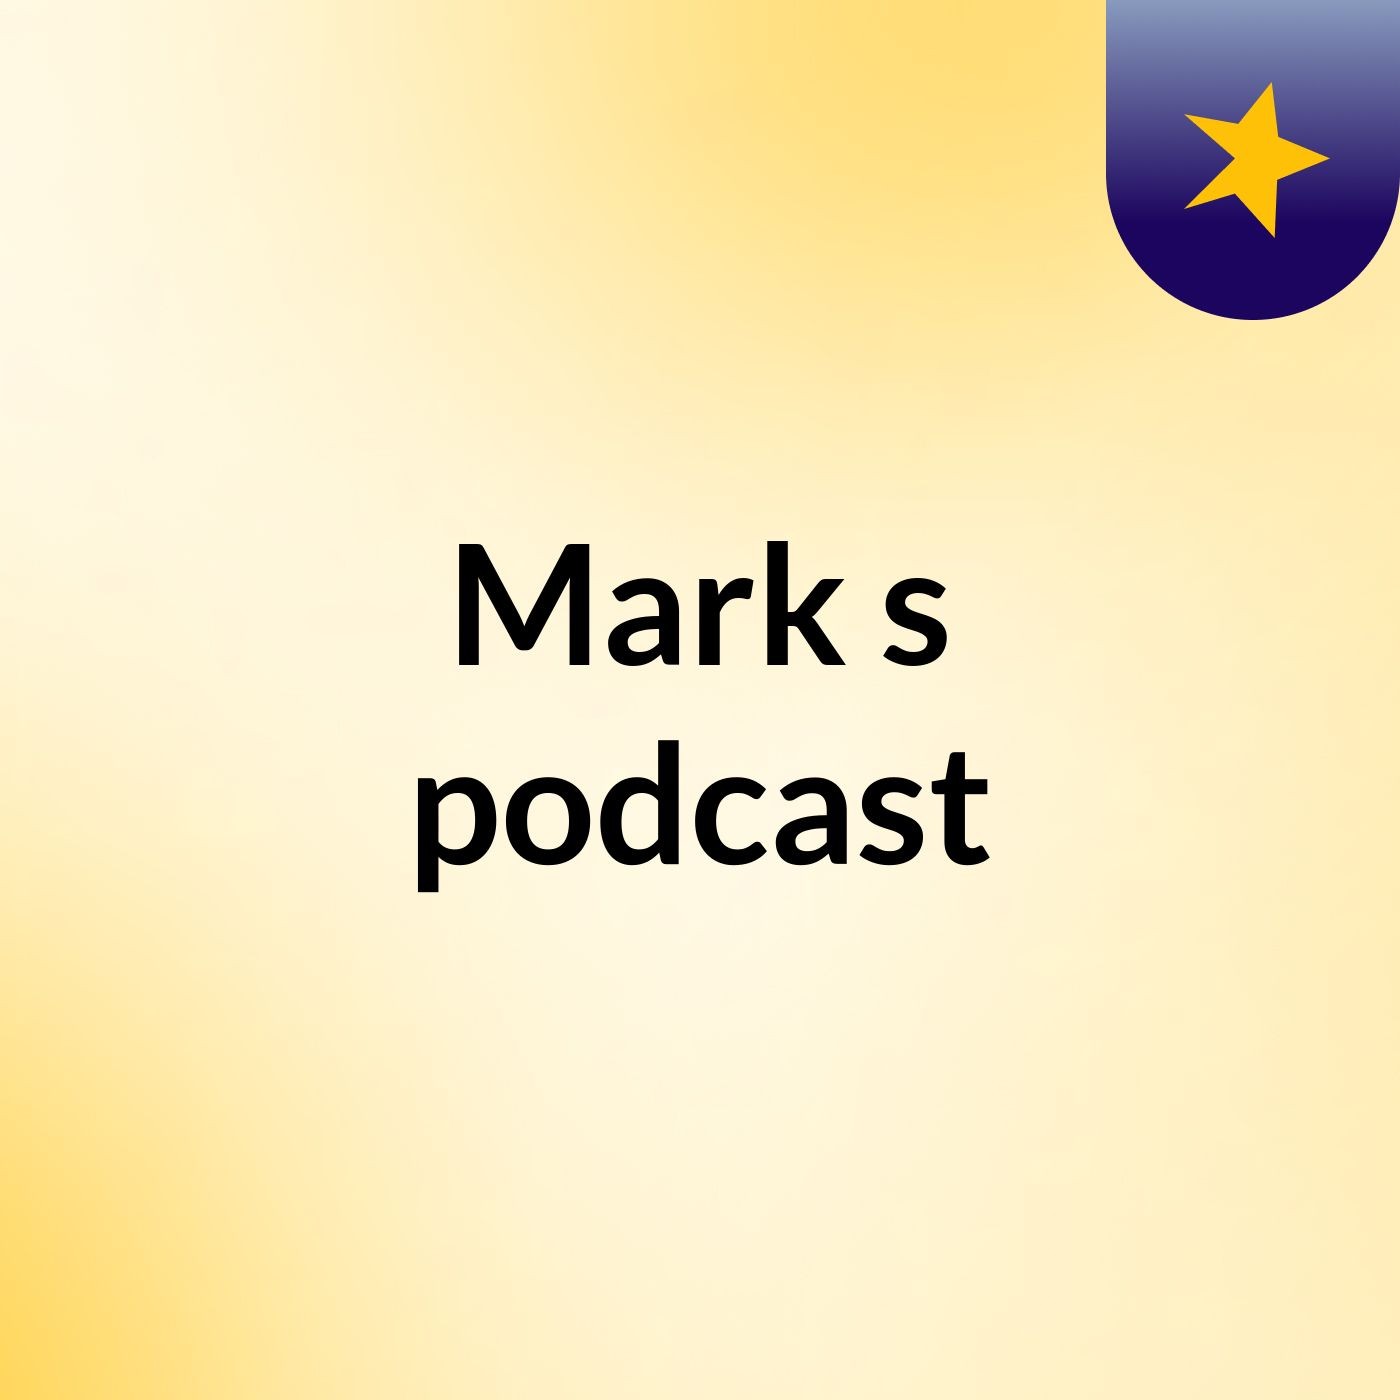 Episode 3 - Mark's podcast